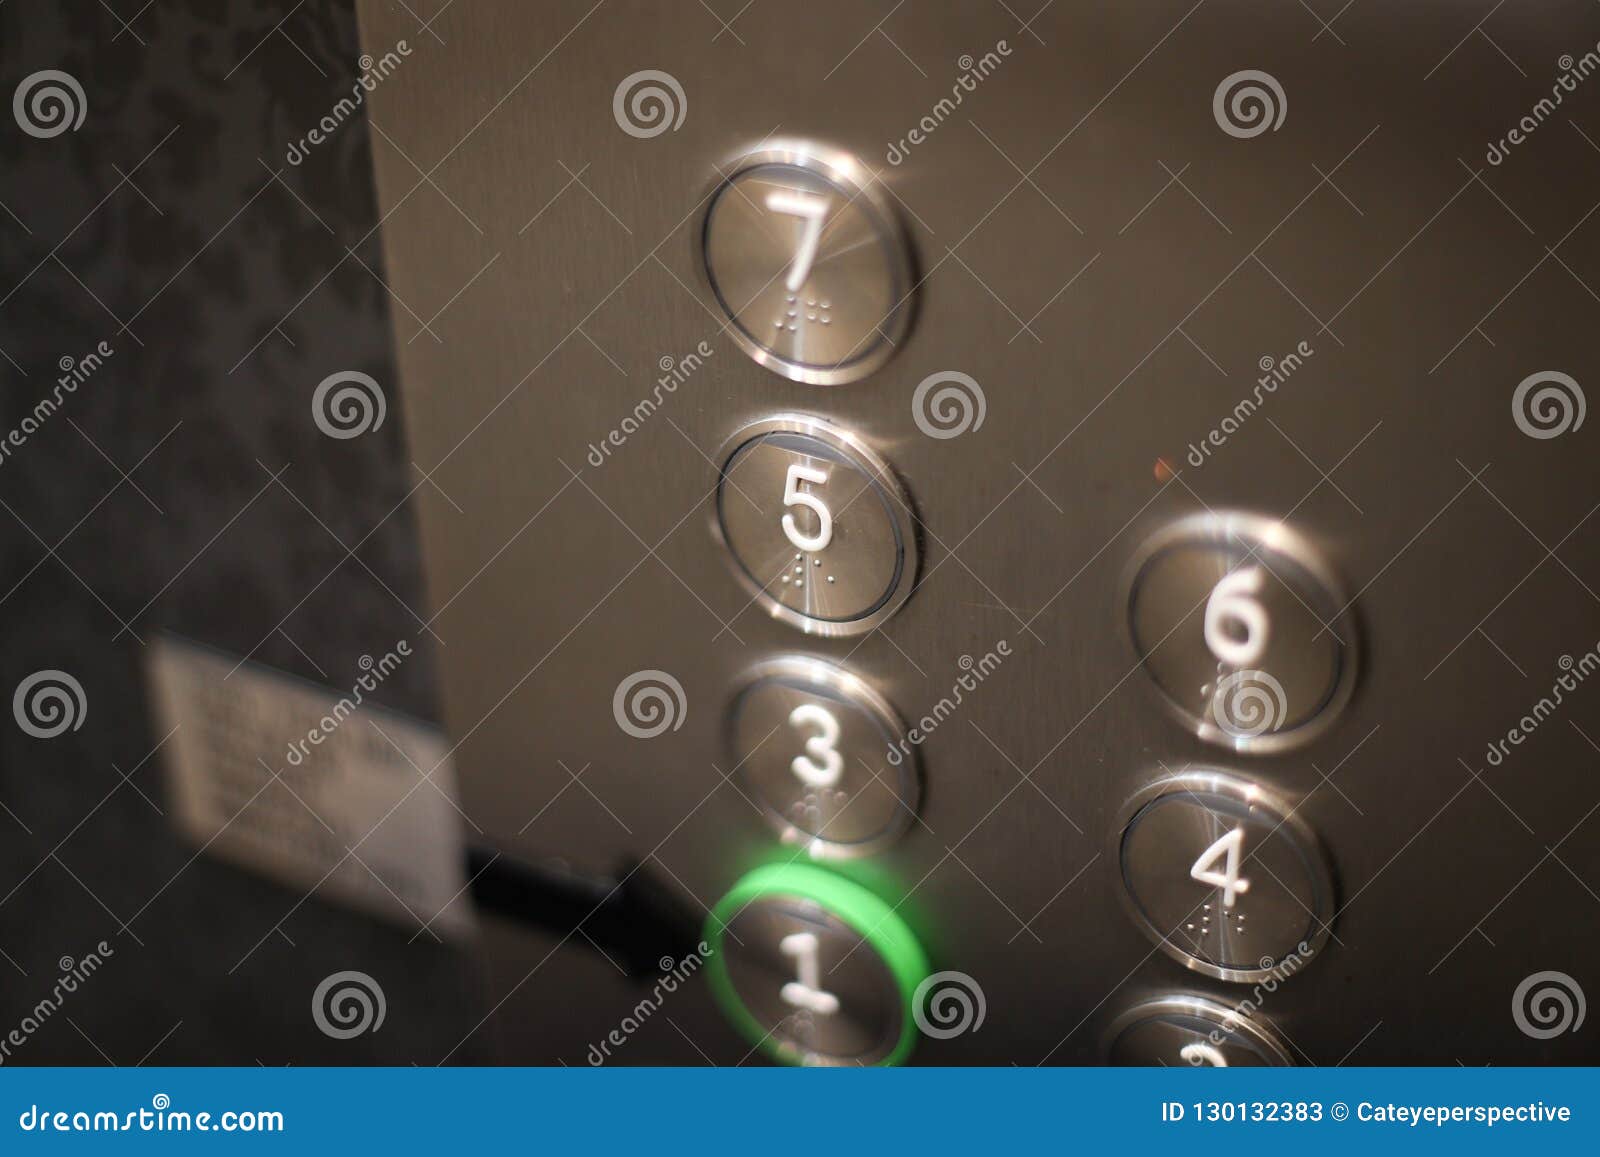 Braille Elevator Numbers Stock Image Image Of Luxury 130132383